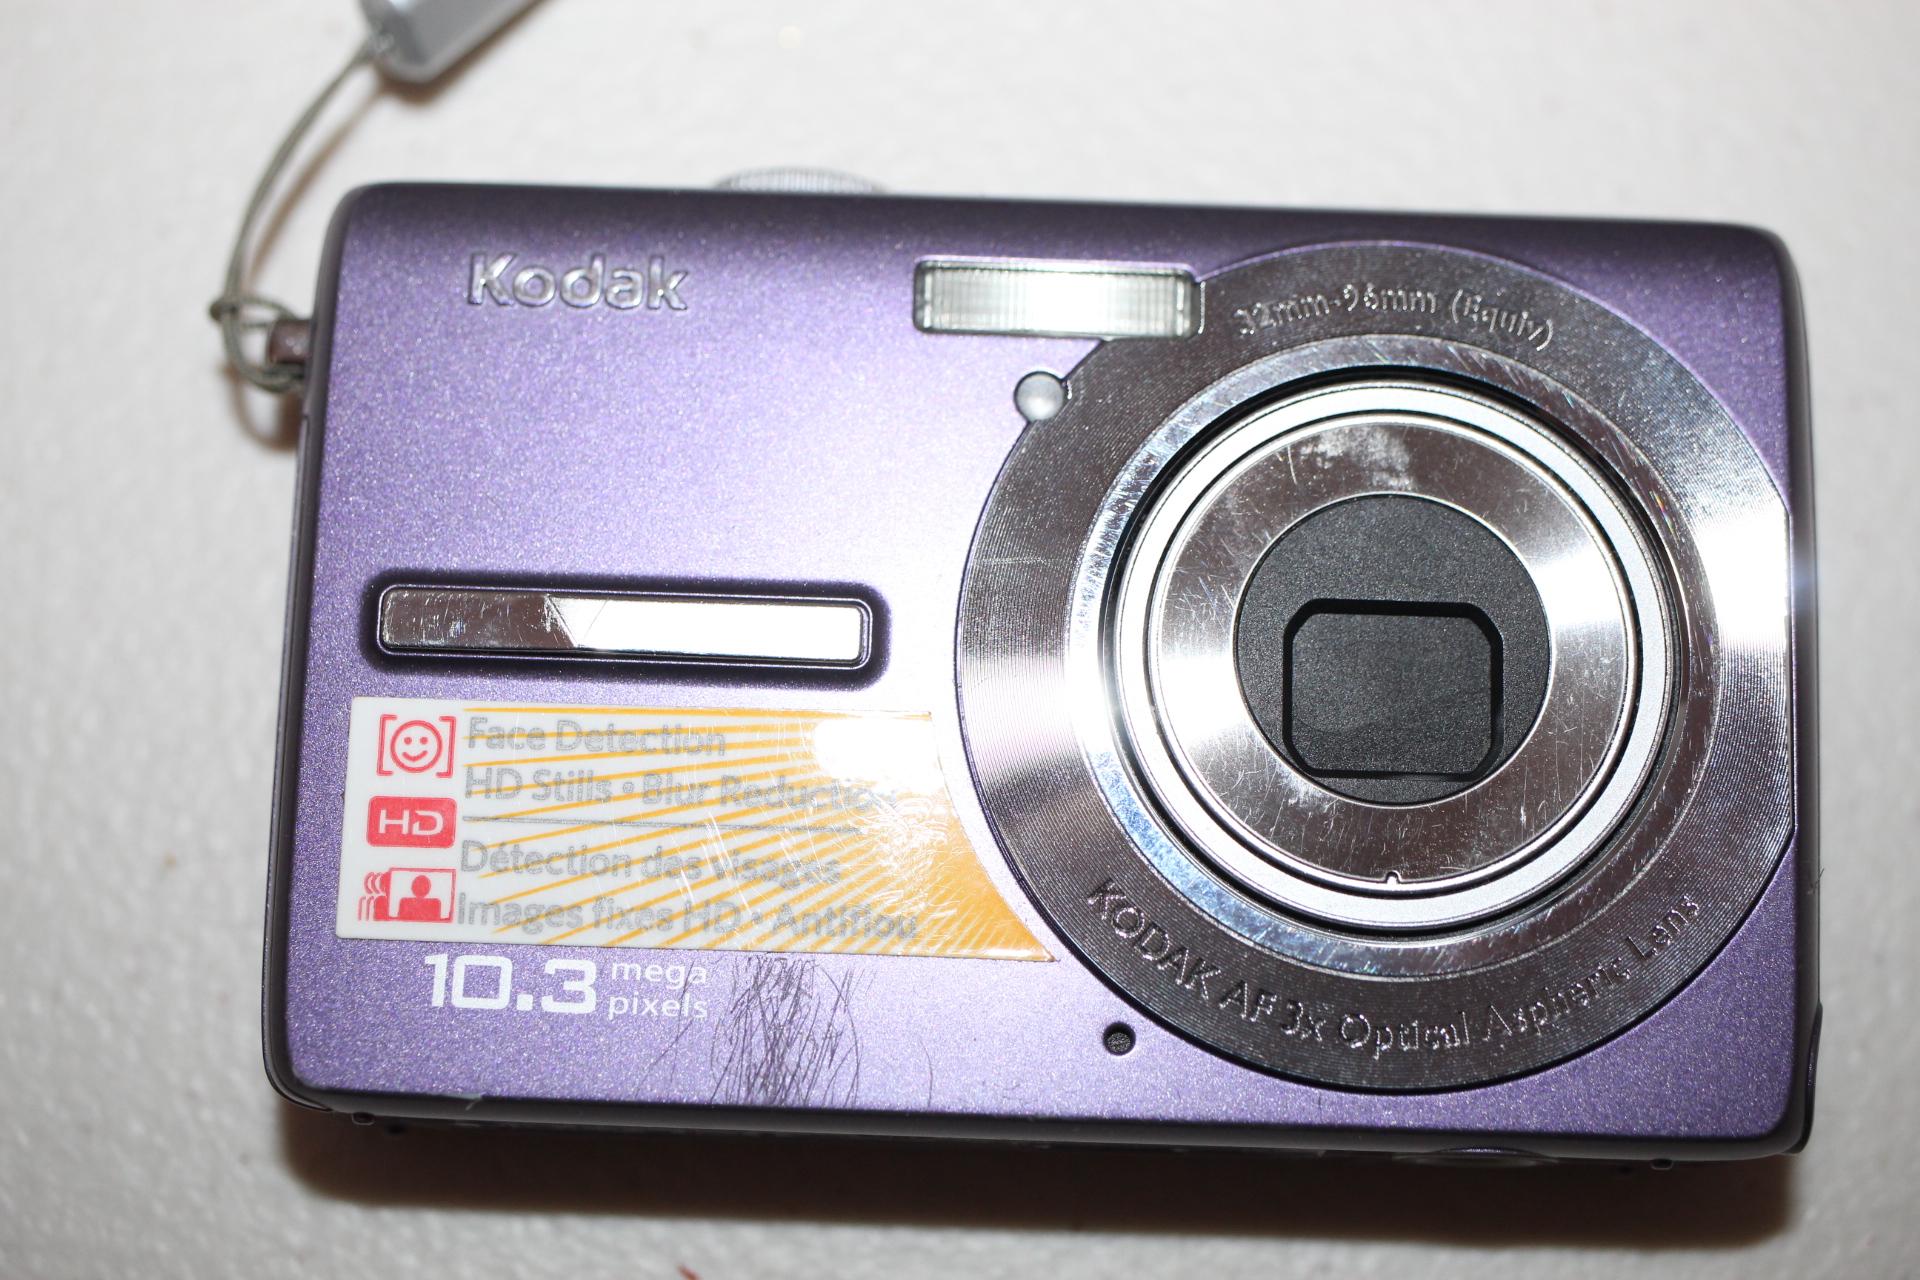 2 Cameras, Canon Power Shot S100, Kodak EasyShare C340, Kodak AF, Nikon Camera Case